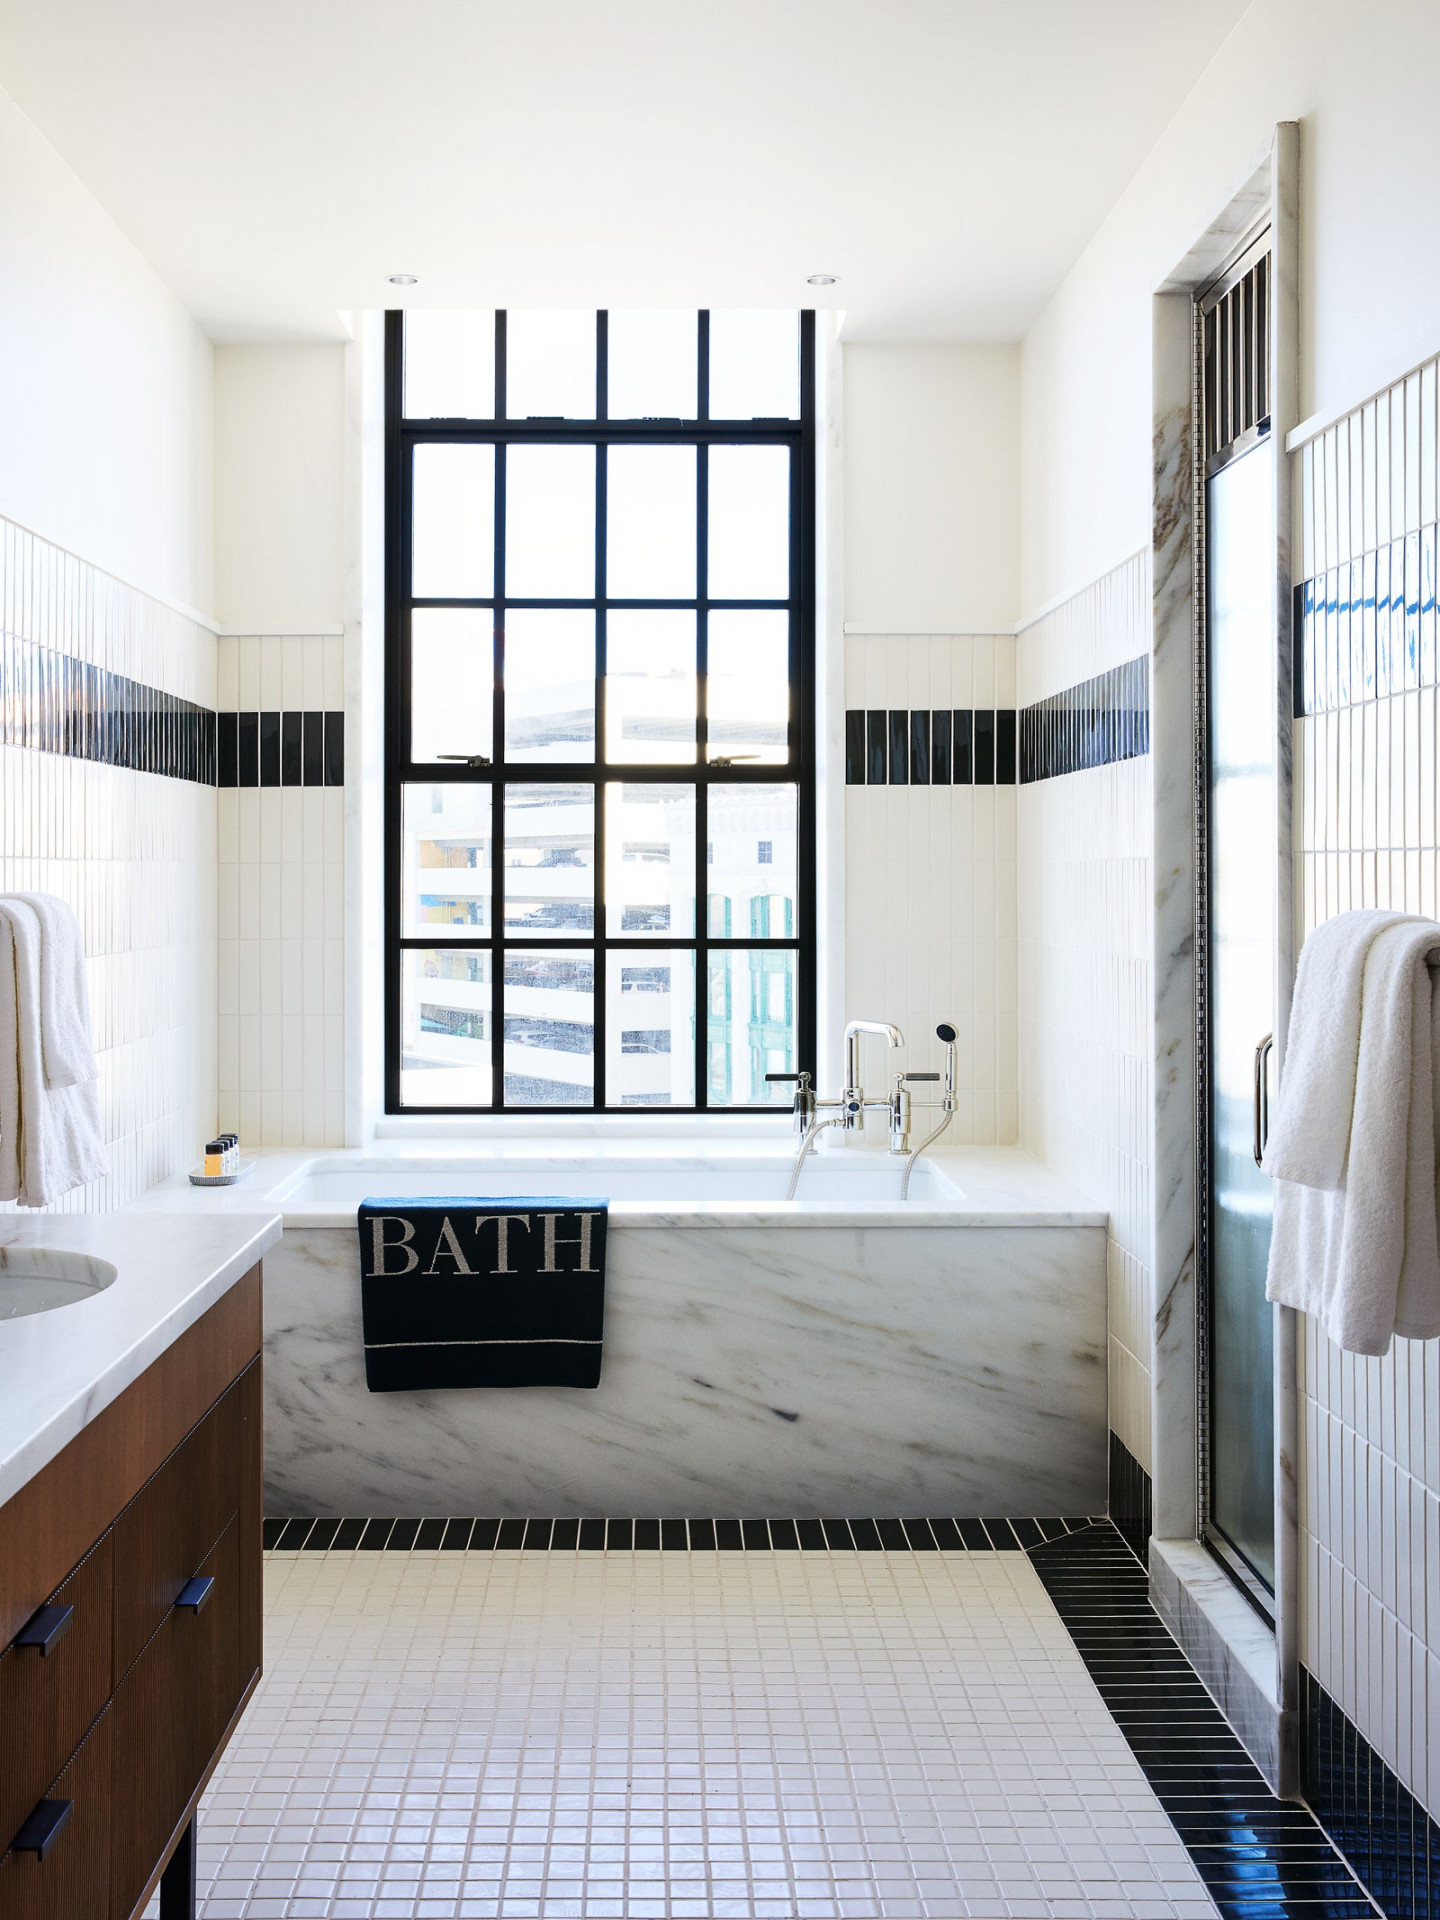 Great Design Awards : Baths  Architectural Digest